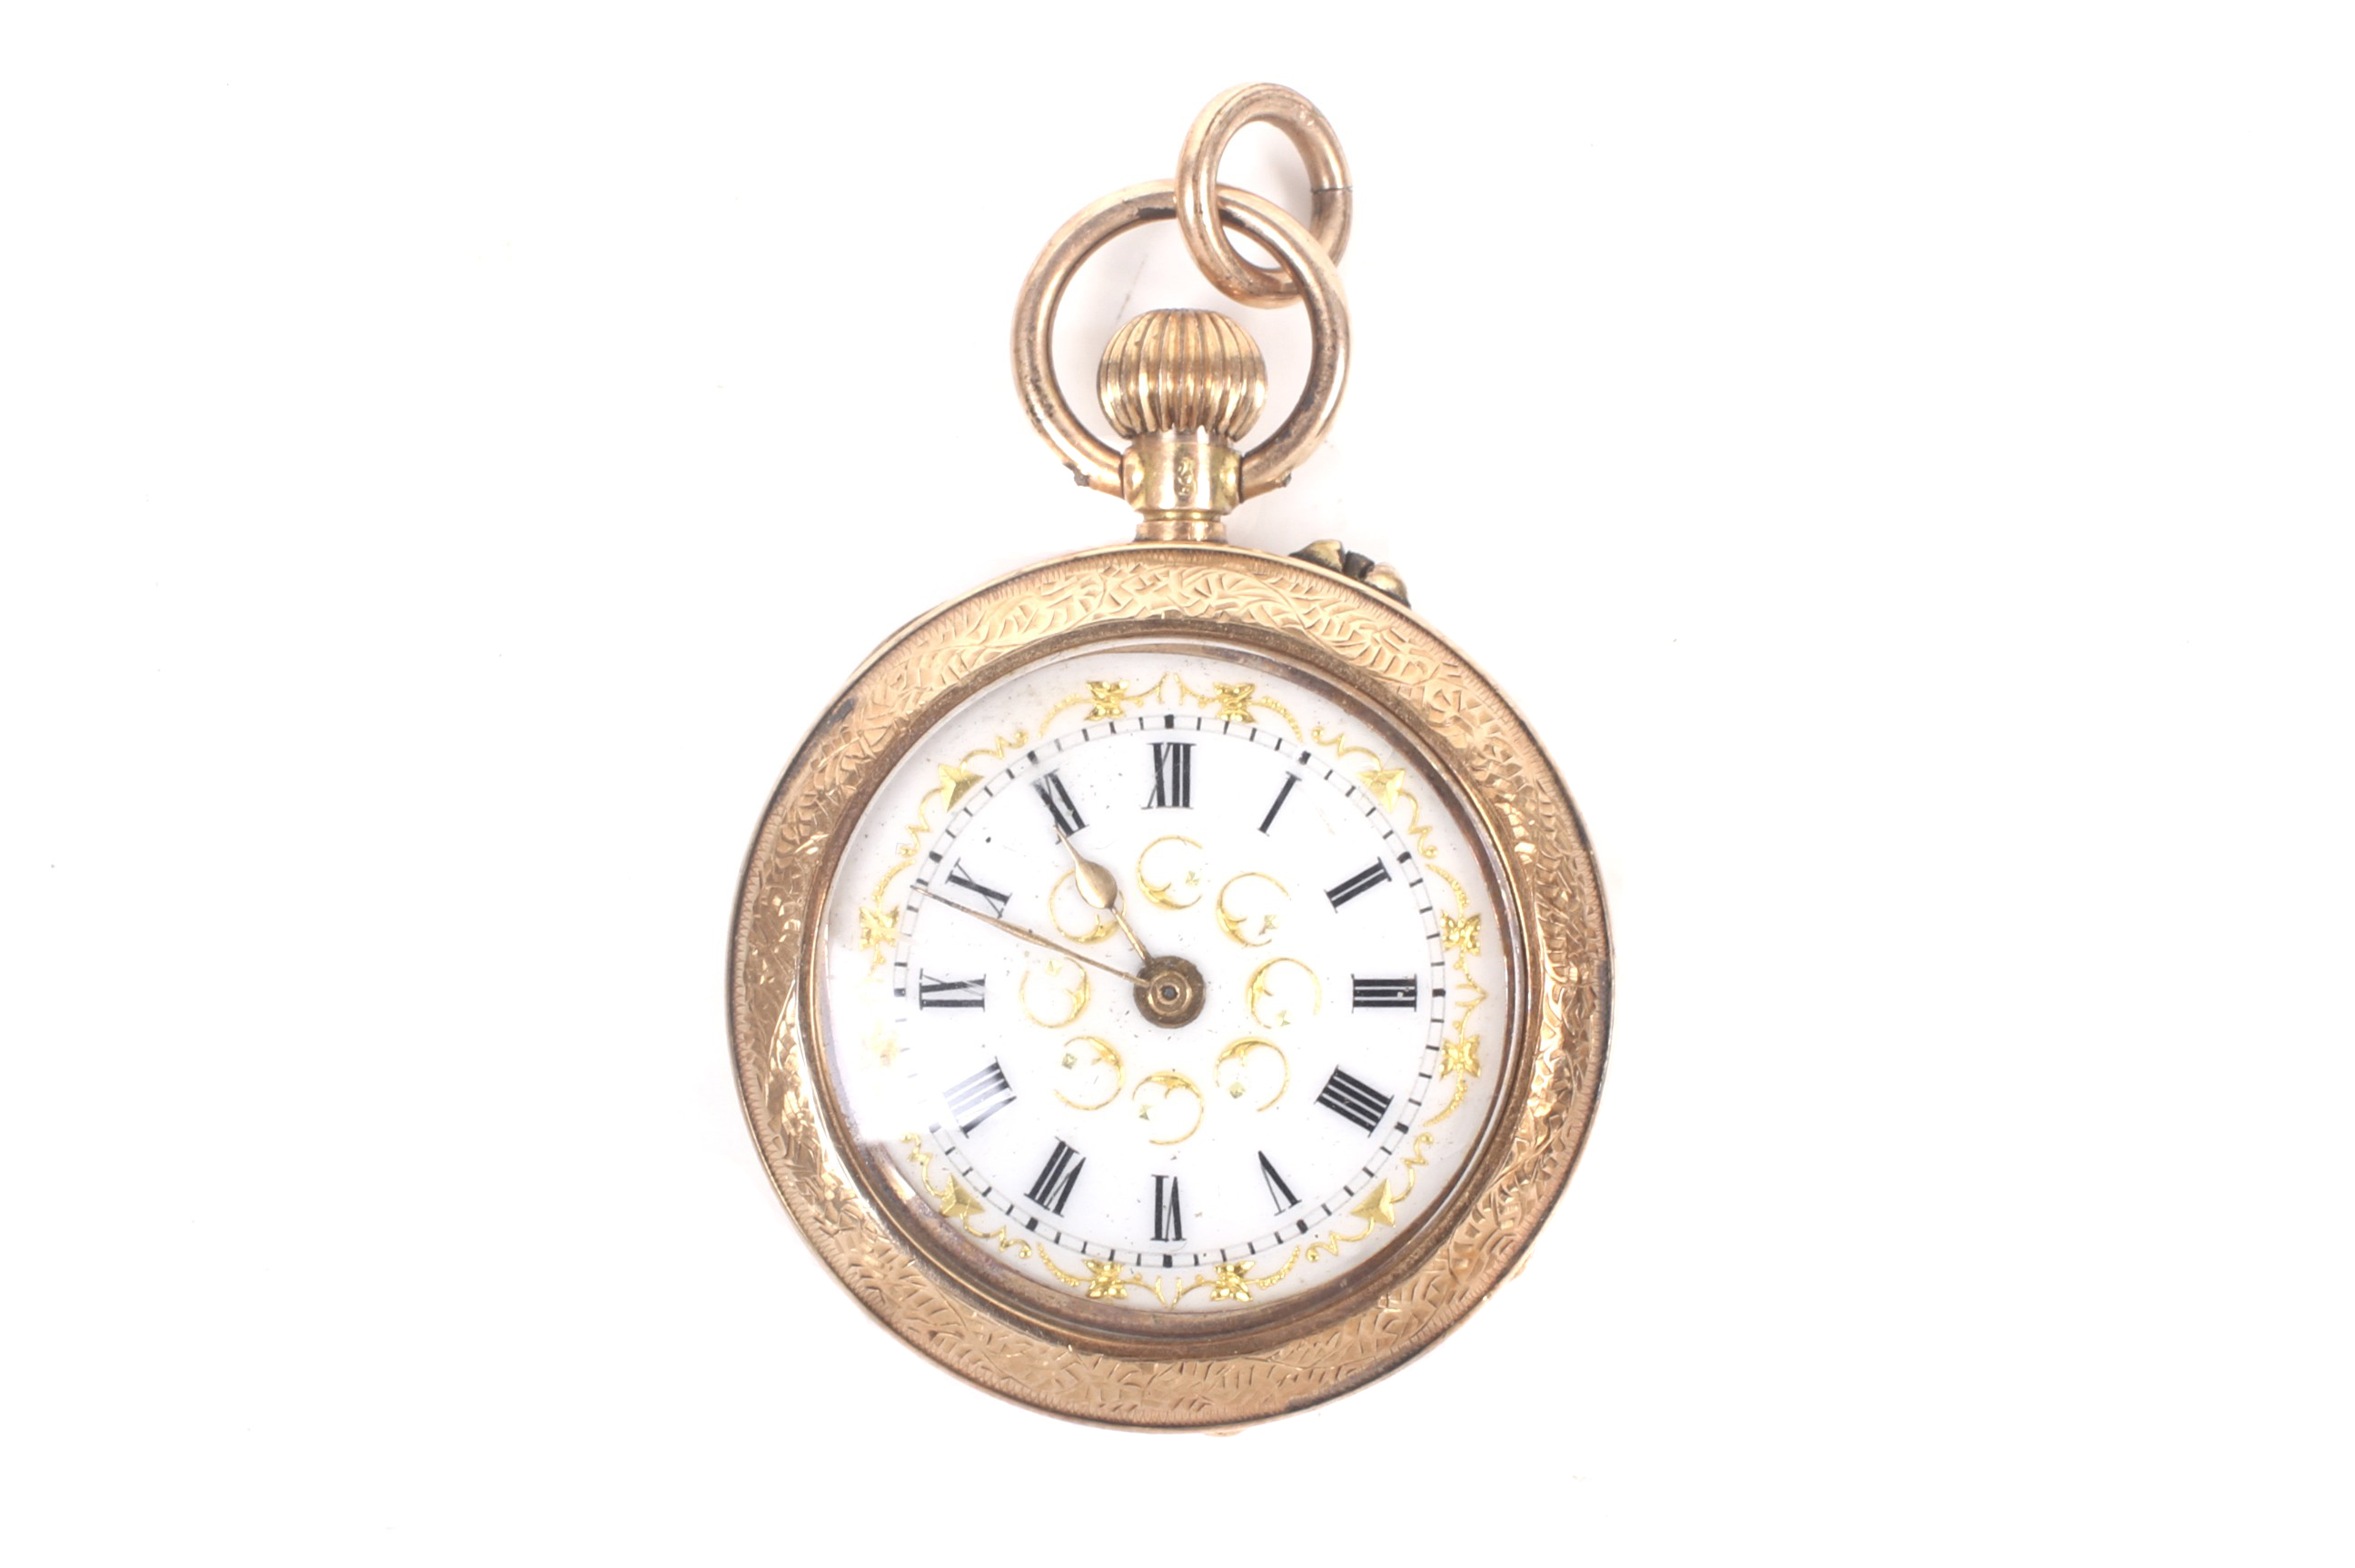 An early 20th century Swiss gold open face keyless fob watch.